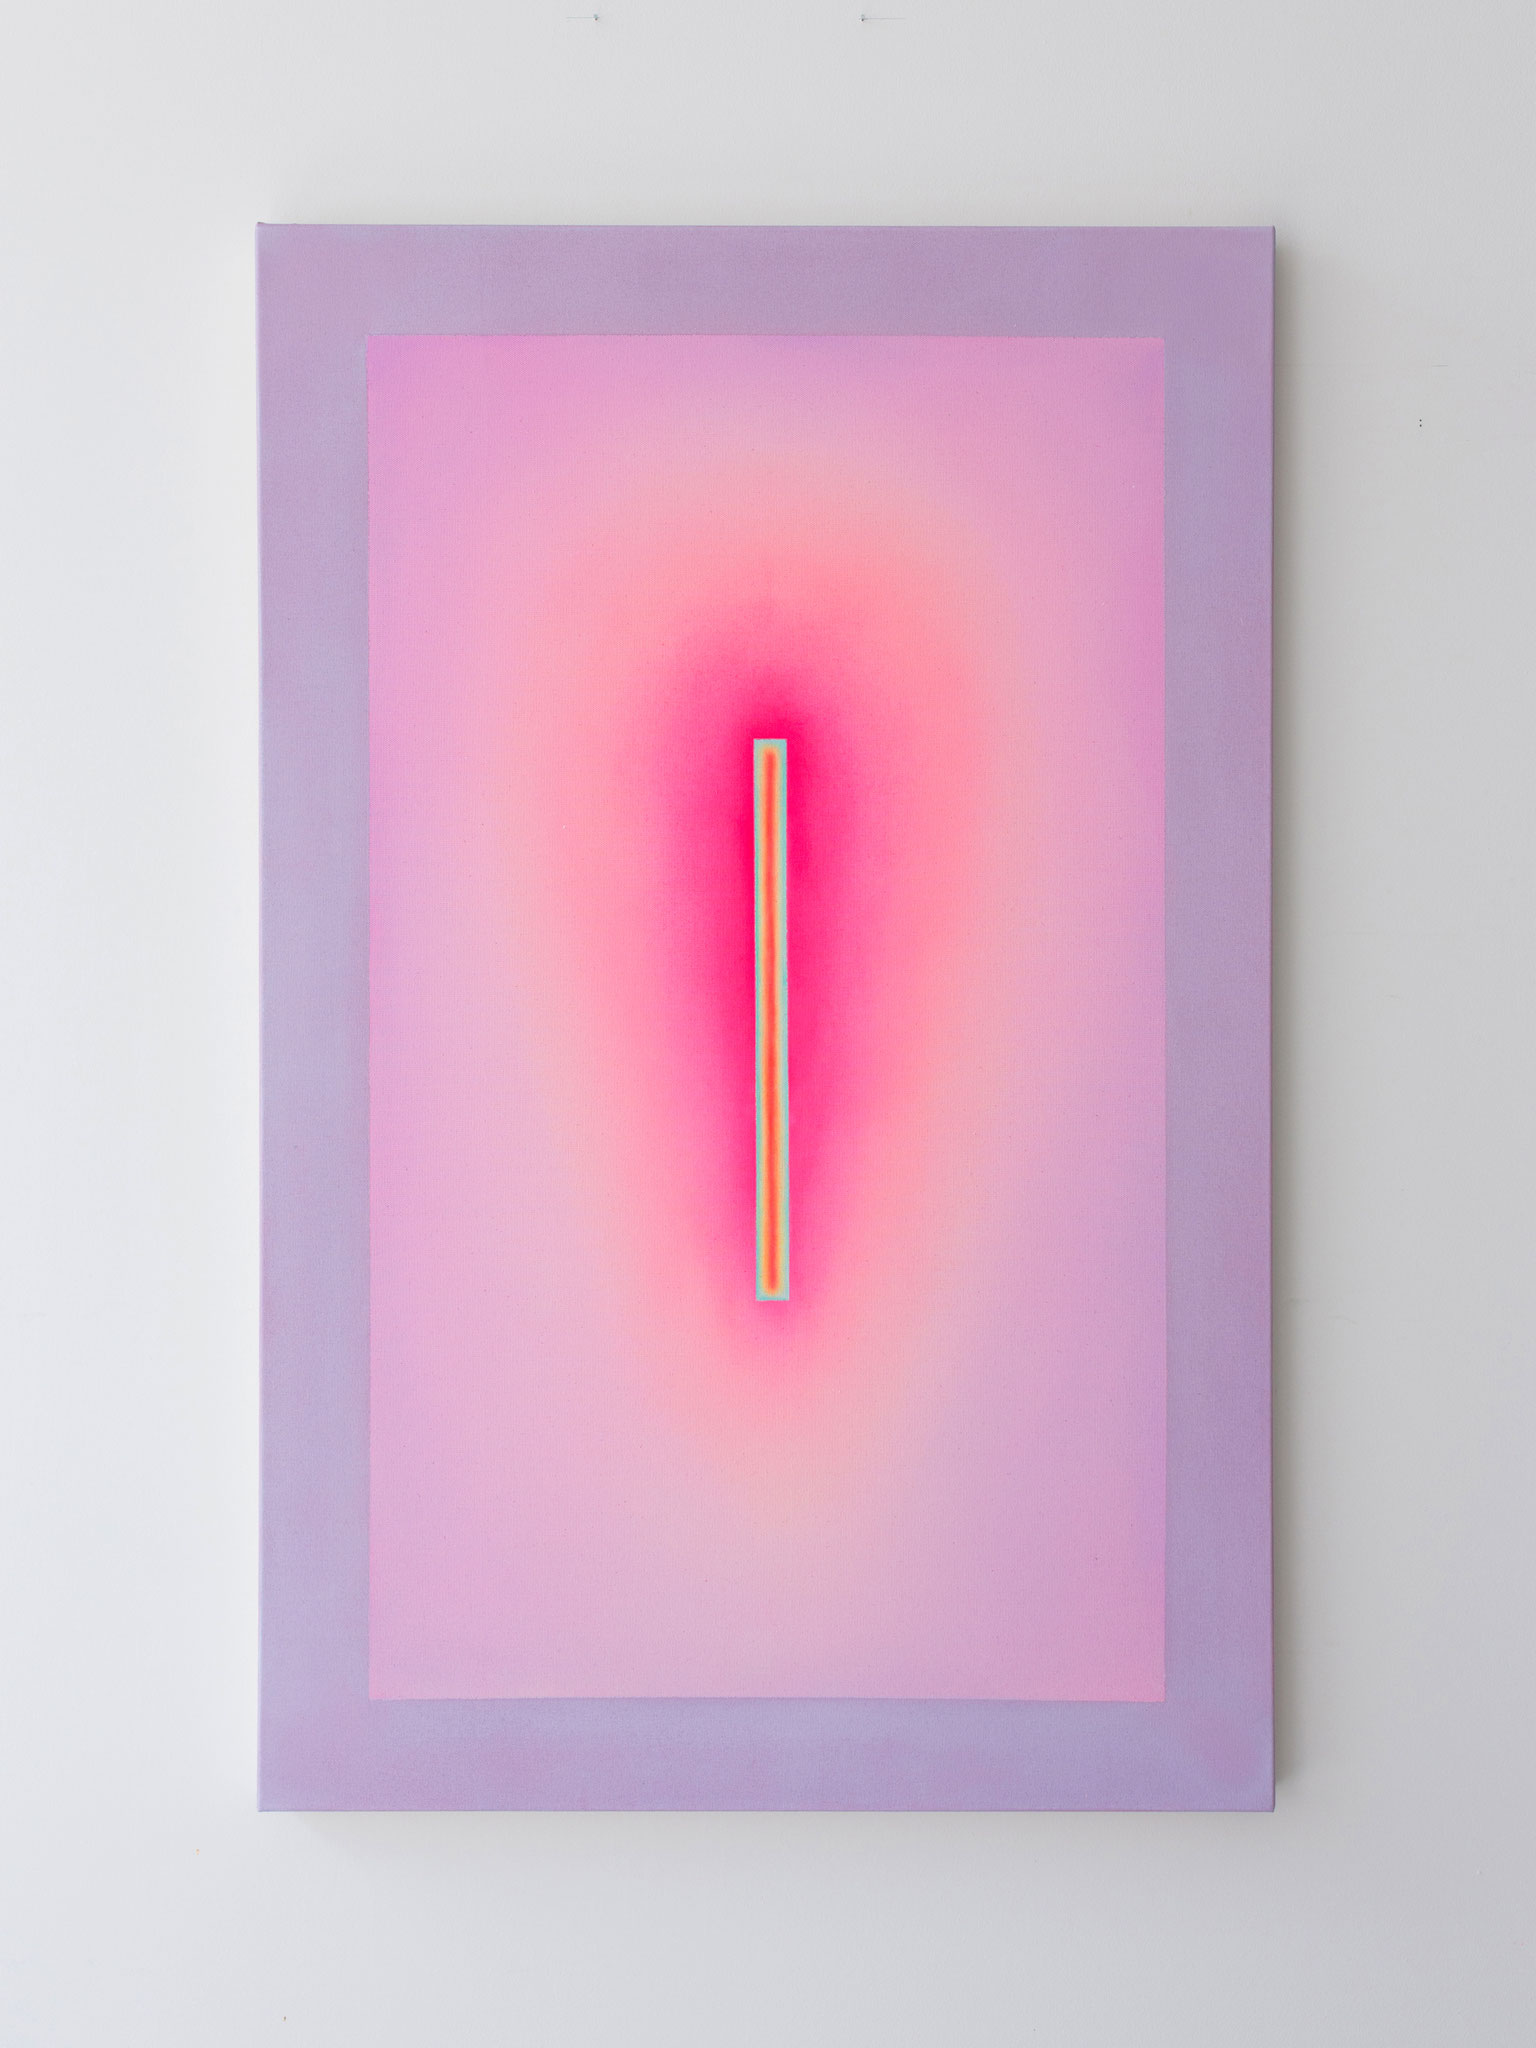 Alina Birkner "Untitled (Pink Pulse)" 2017, 140x90 cm, Acrylic on Canvas